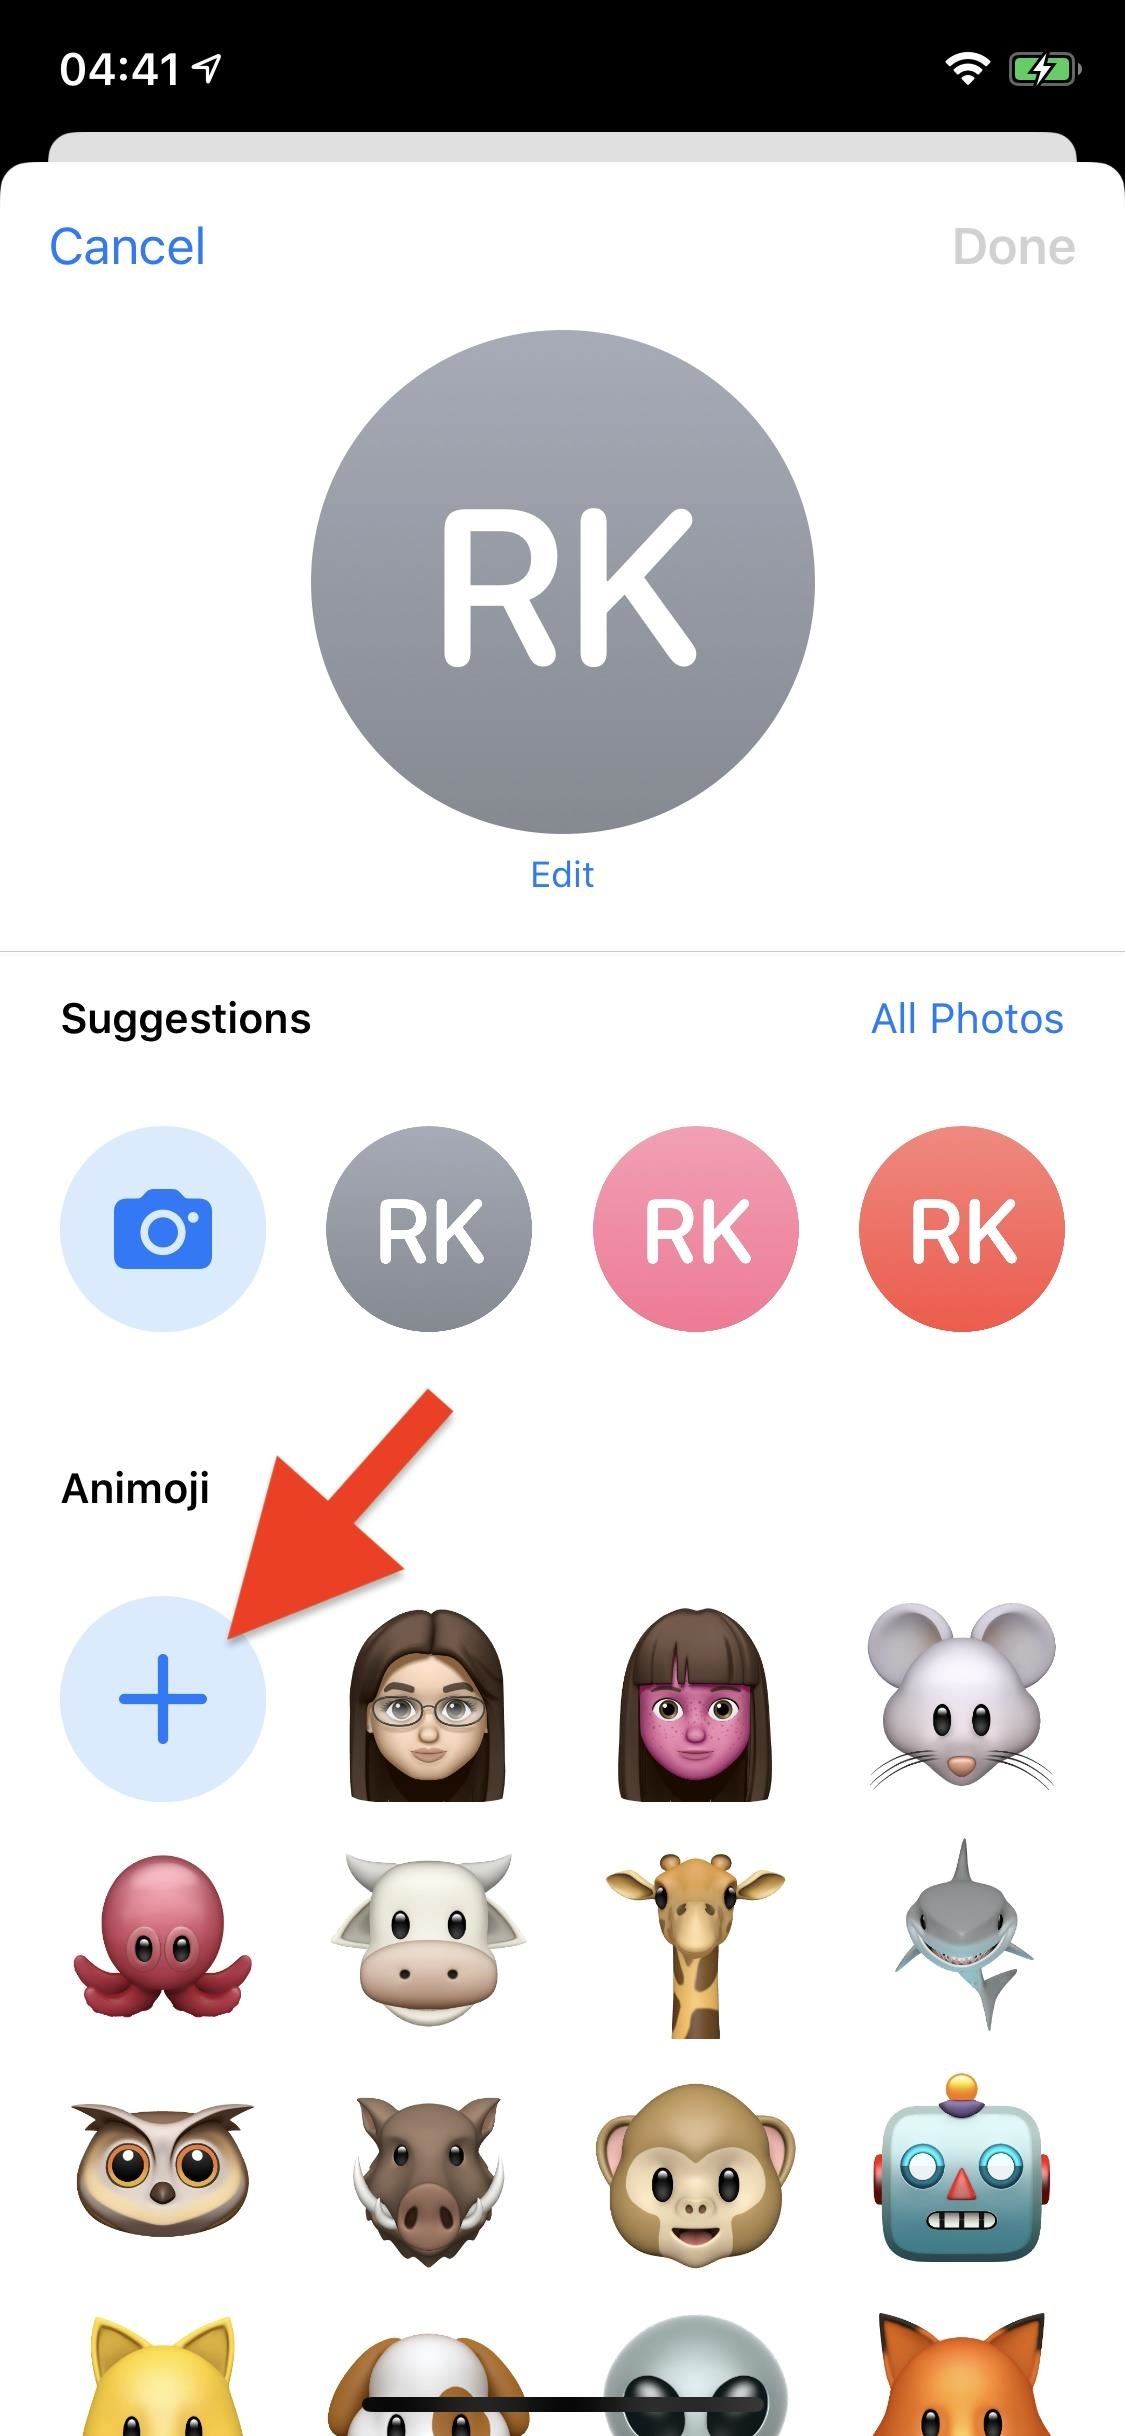 Animoji: How to Create a Personal Memoji on Any iPhone Running iOS 13